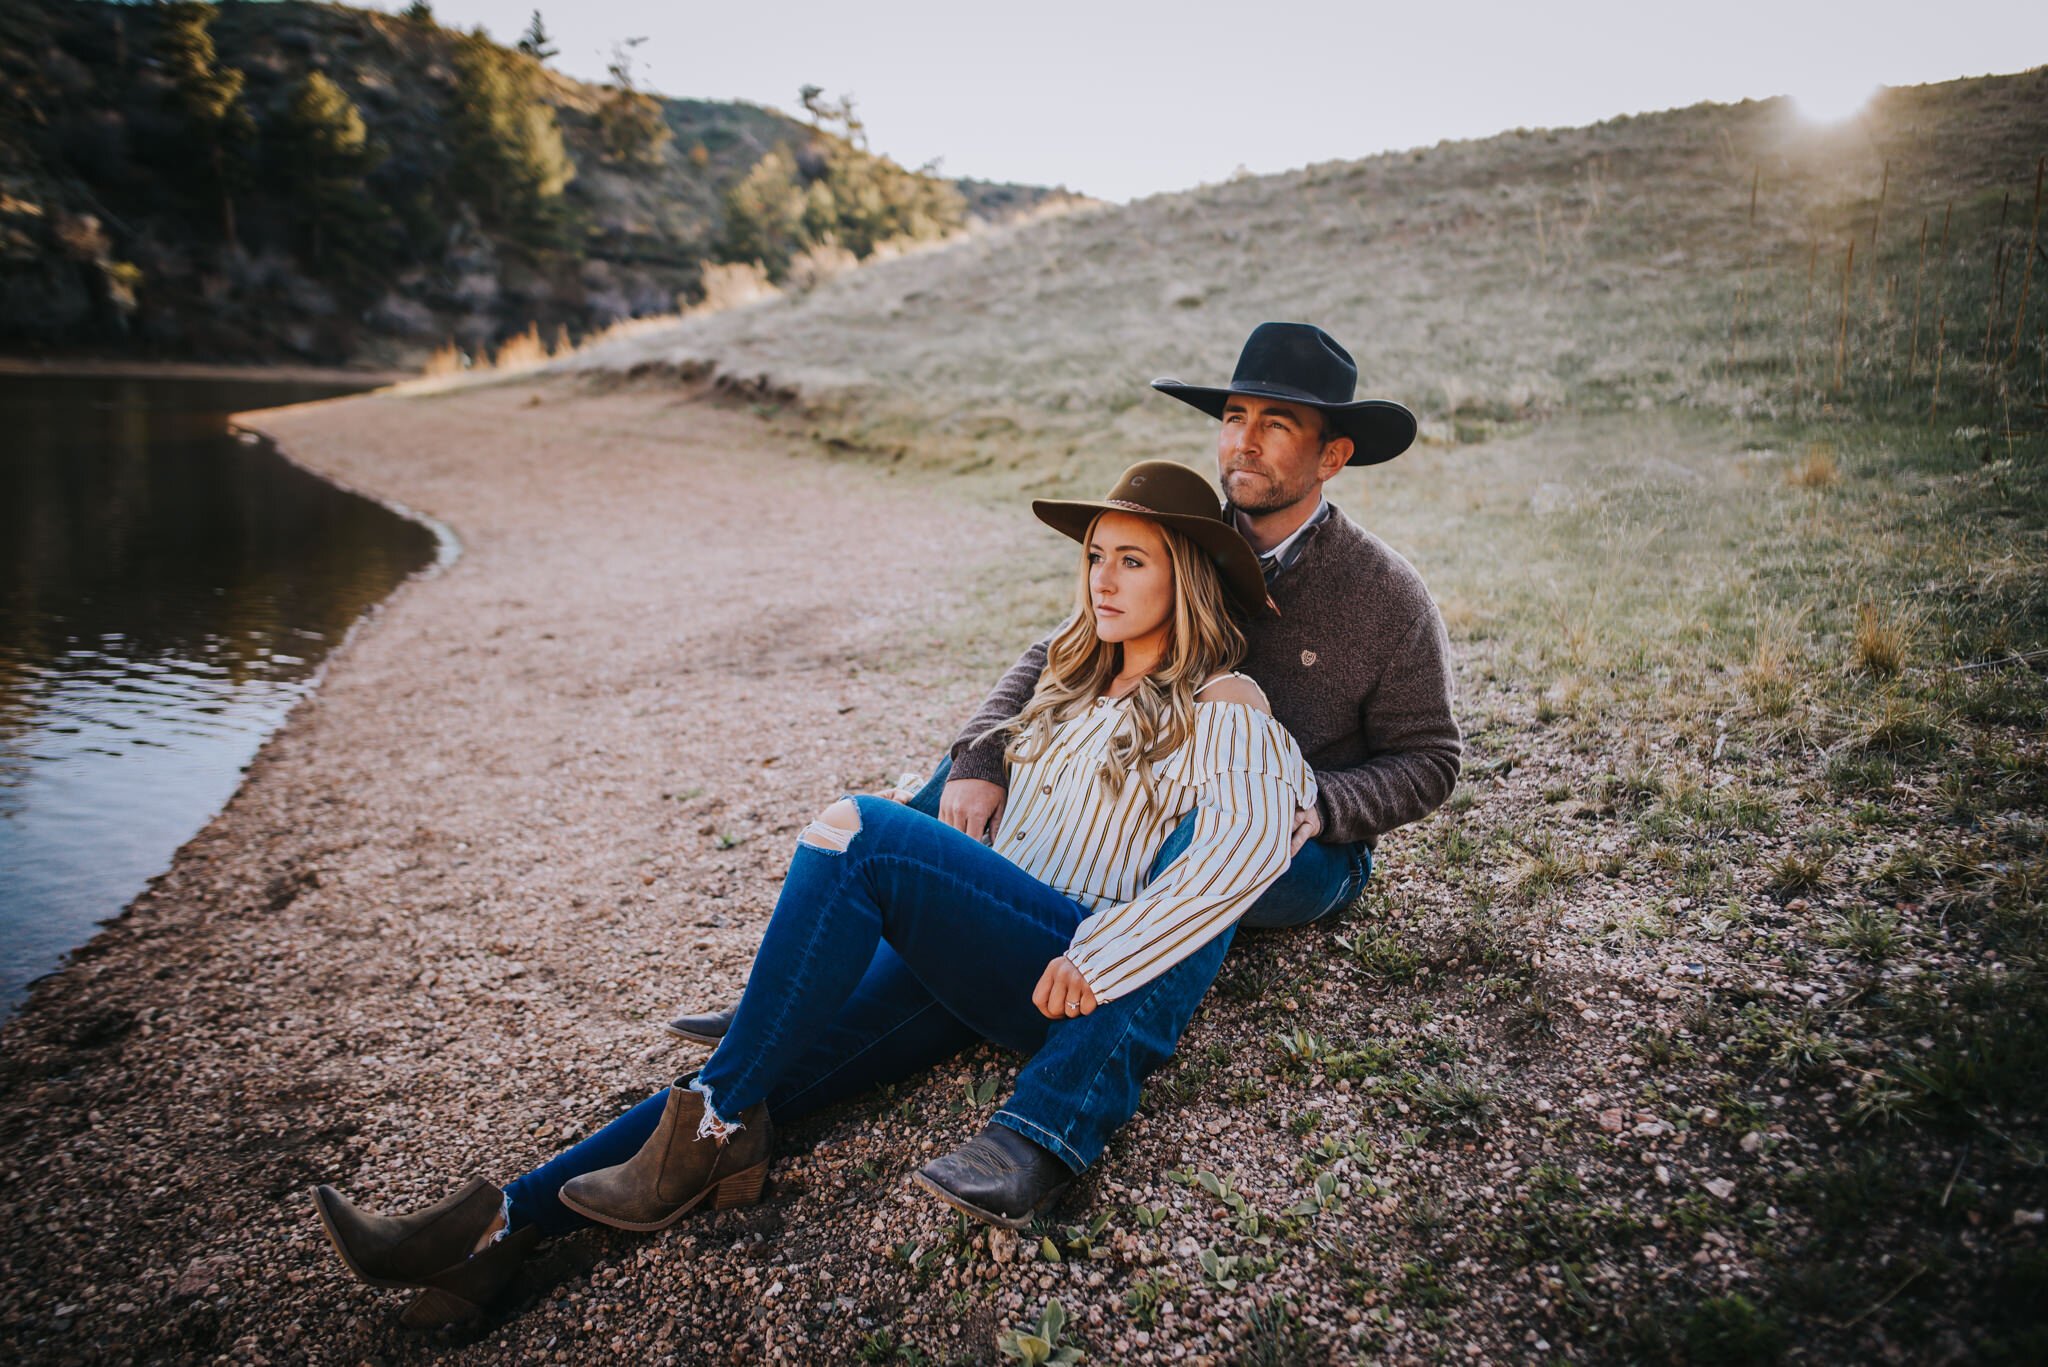 Shelby+and+Brady+Engagement+Session+Cheyenne+Wyoming+Sunset+Water+Fields+Rocks+Nature+Colorado+Photographer+Wild+Prairie+Photography-02-2020.jpeg